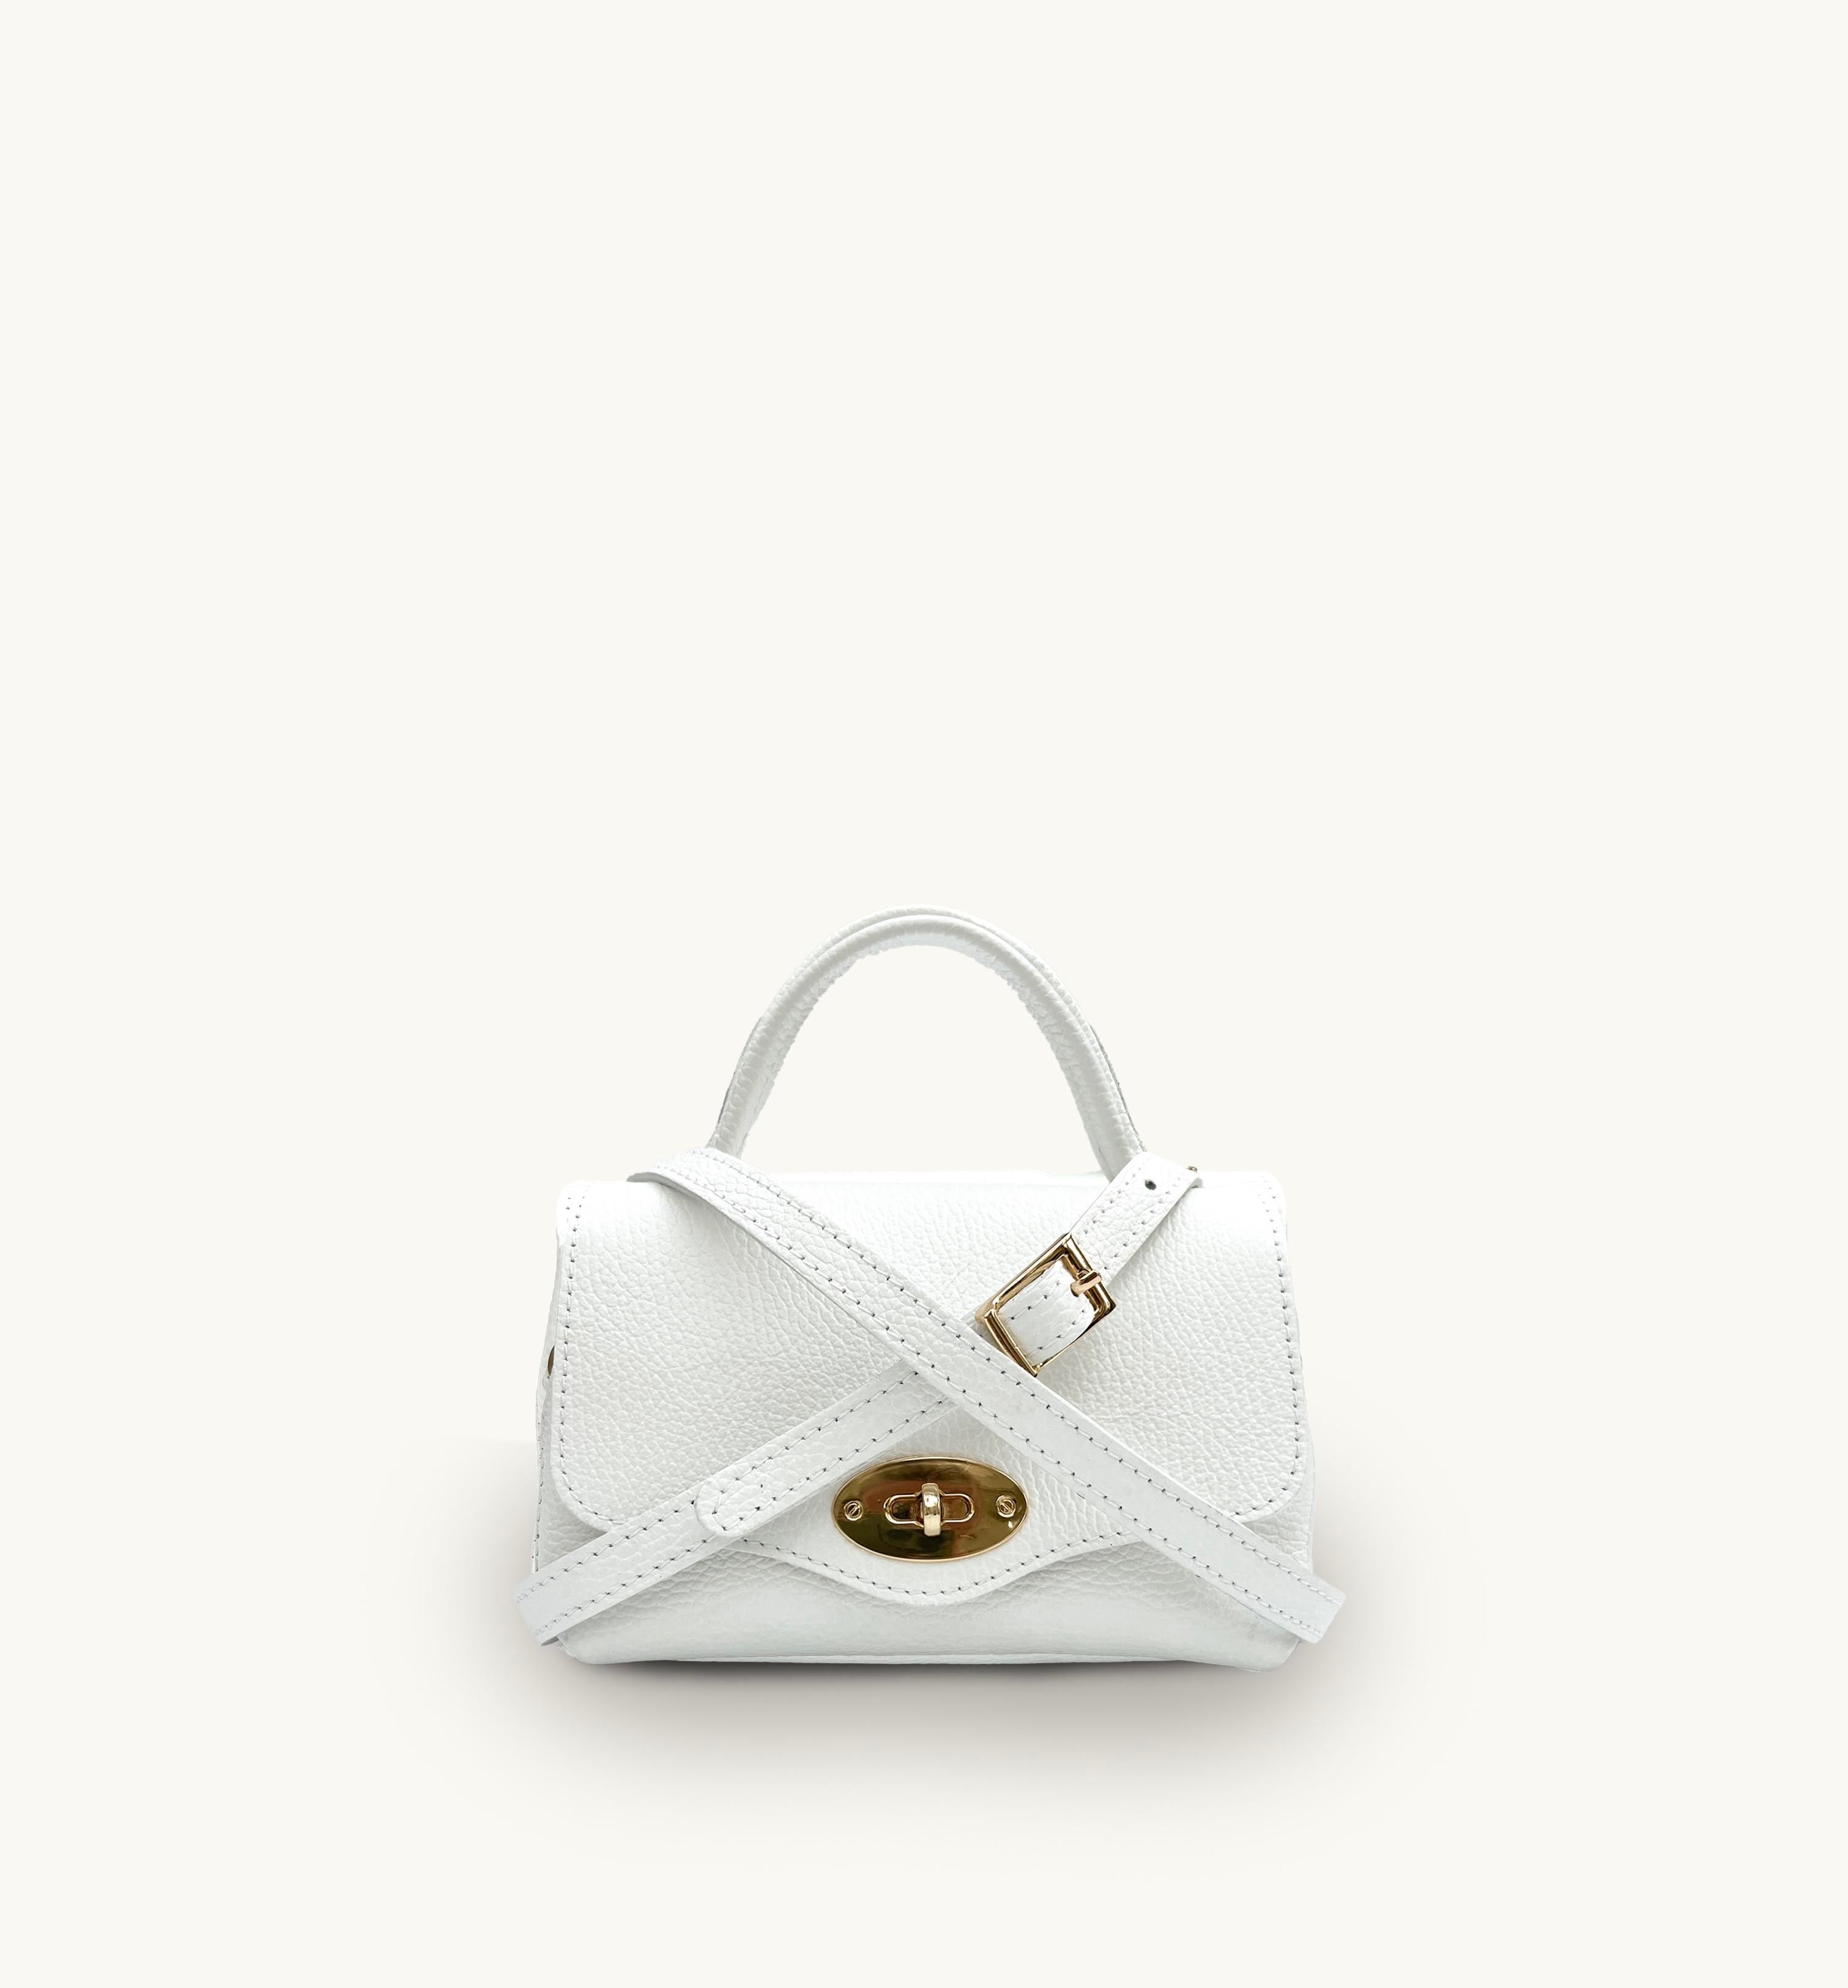 The Rachel White Leather Bag